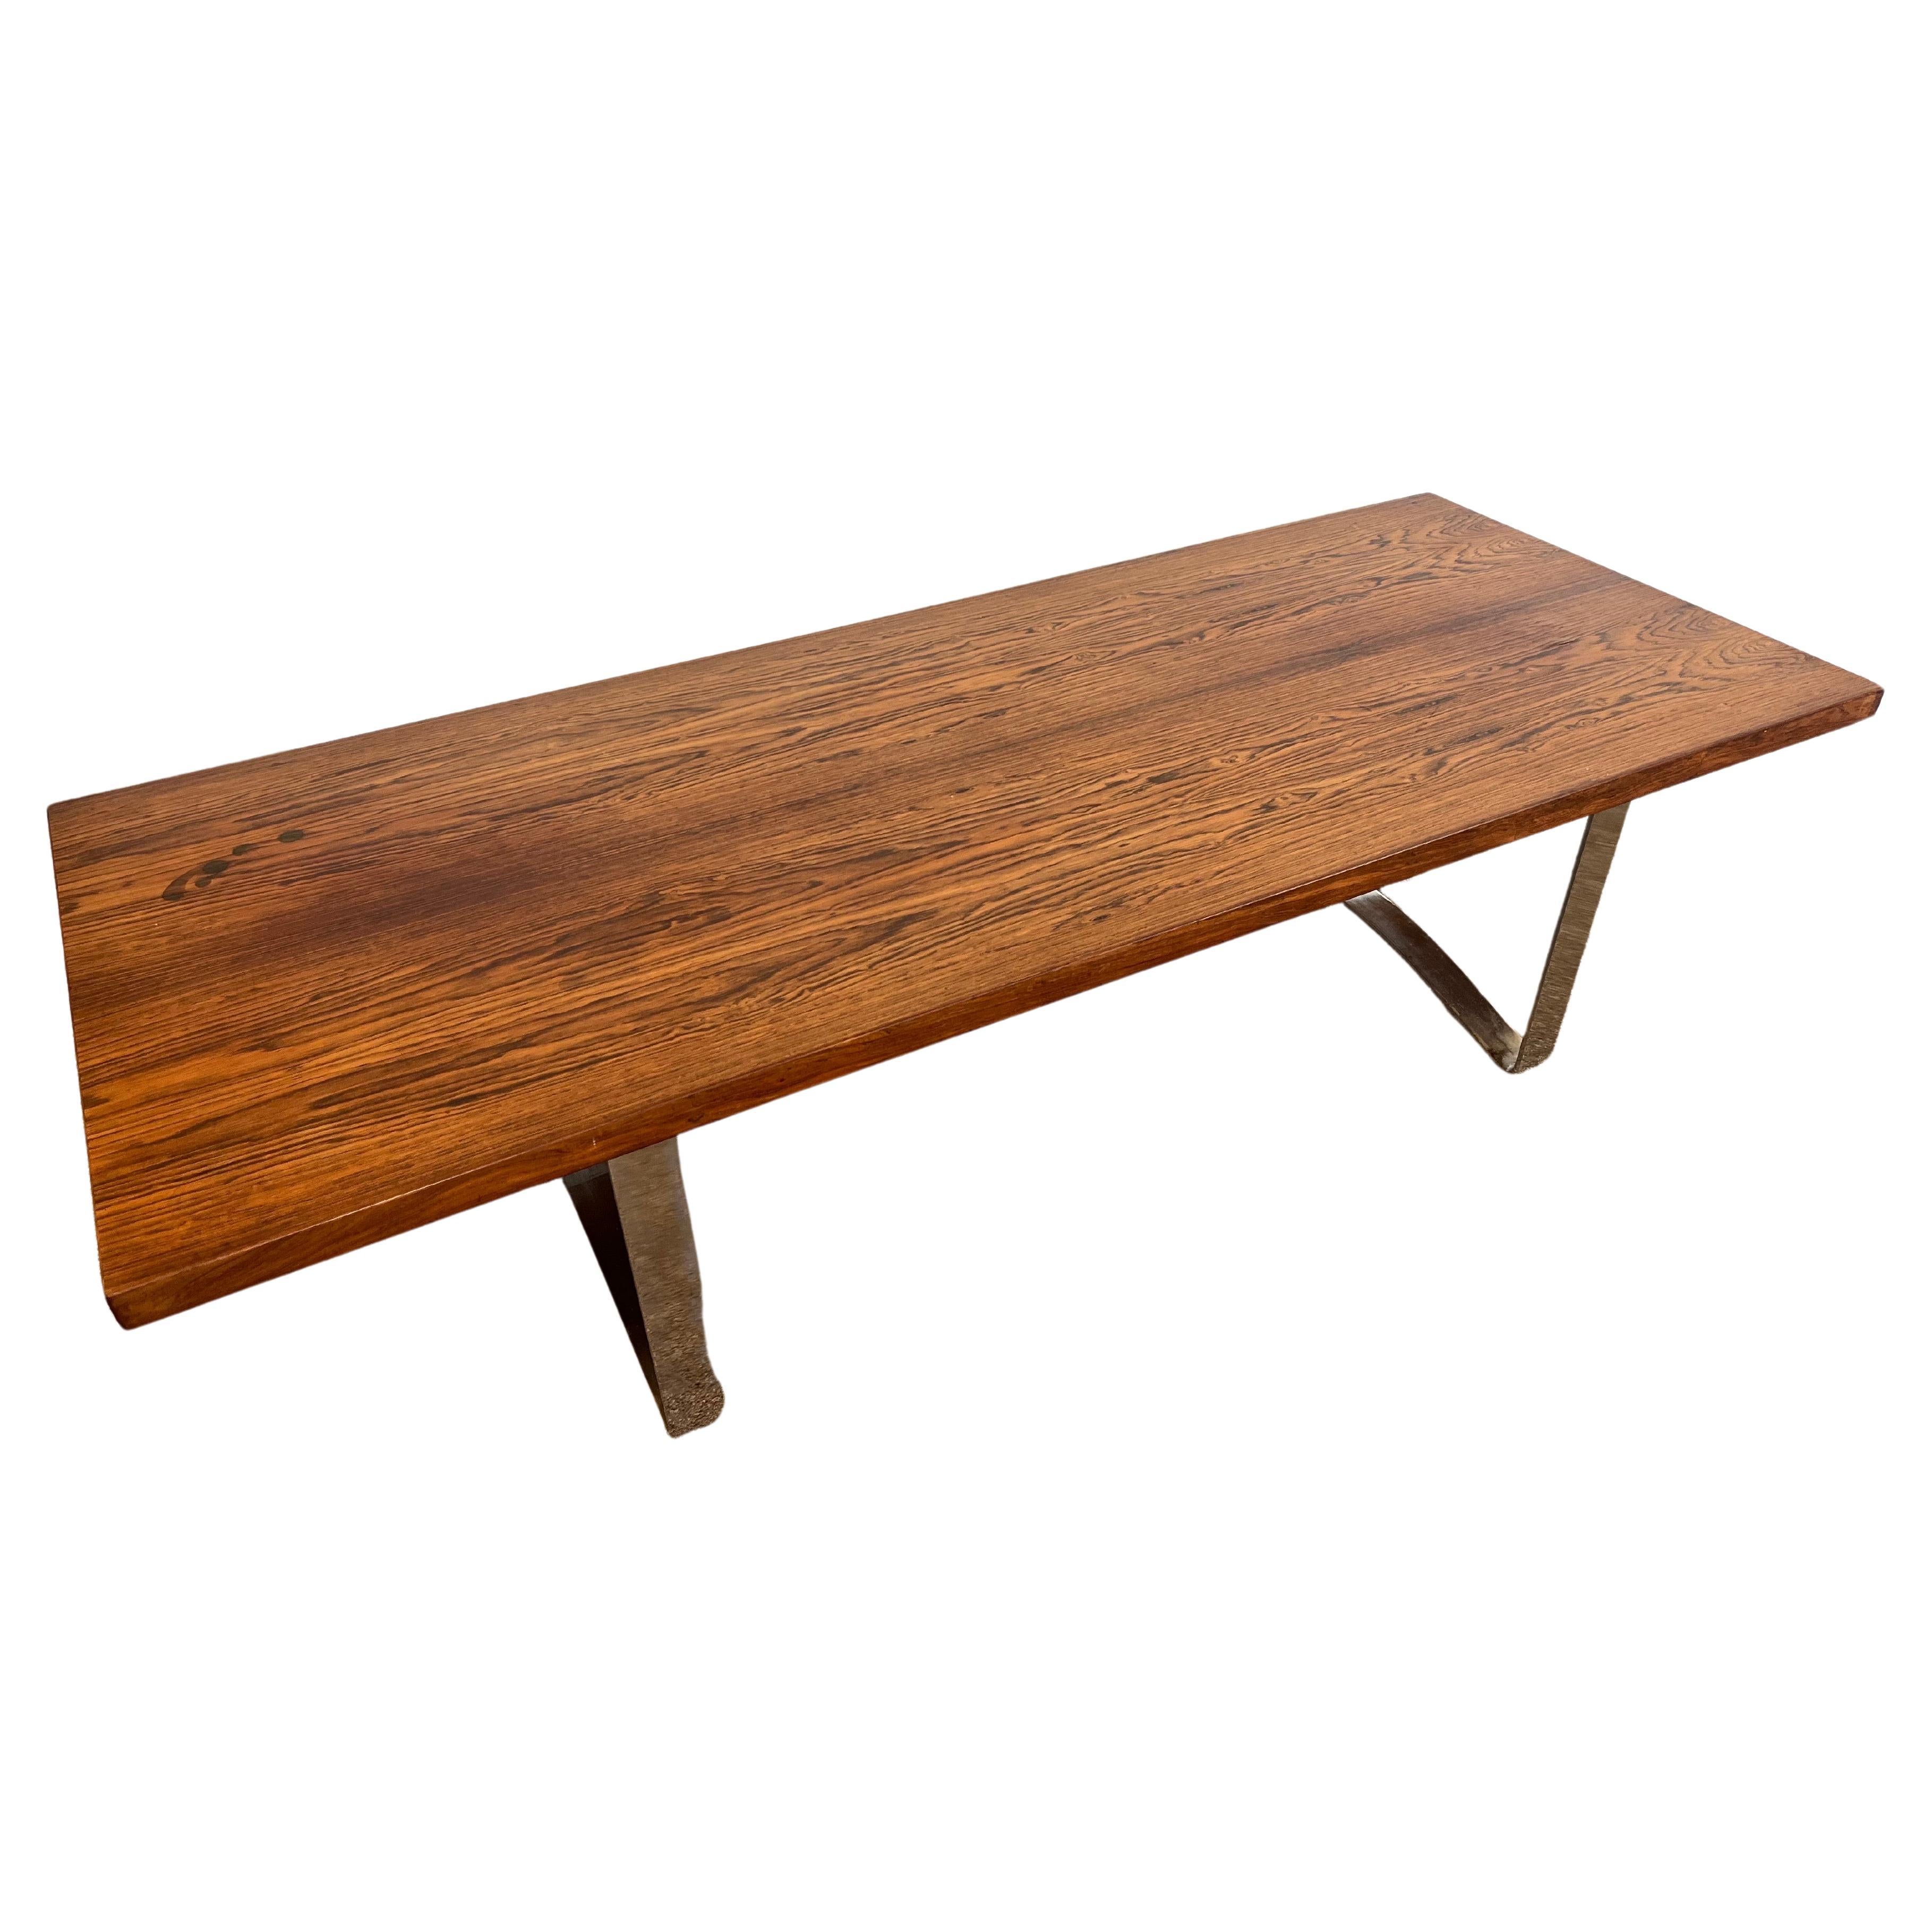 Bodil Kjaer for E. Pedersen Danish Modern Bench or Coffee Table Wood and Chrome For Sale